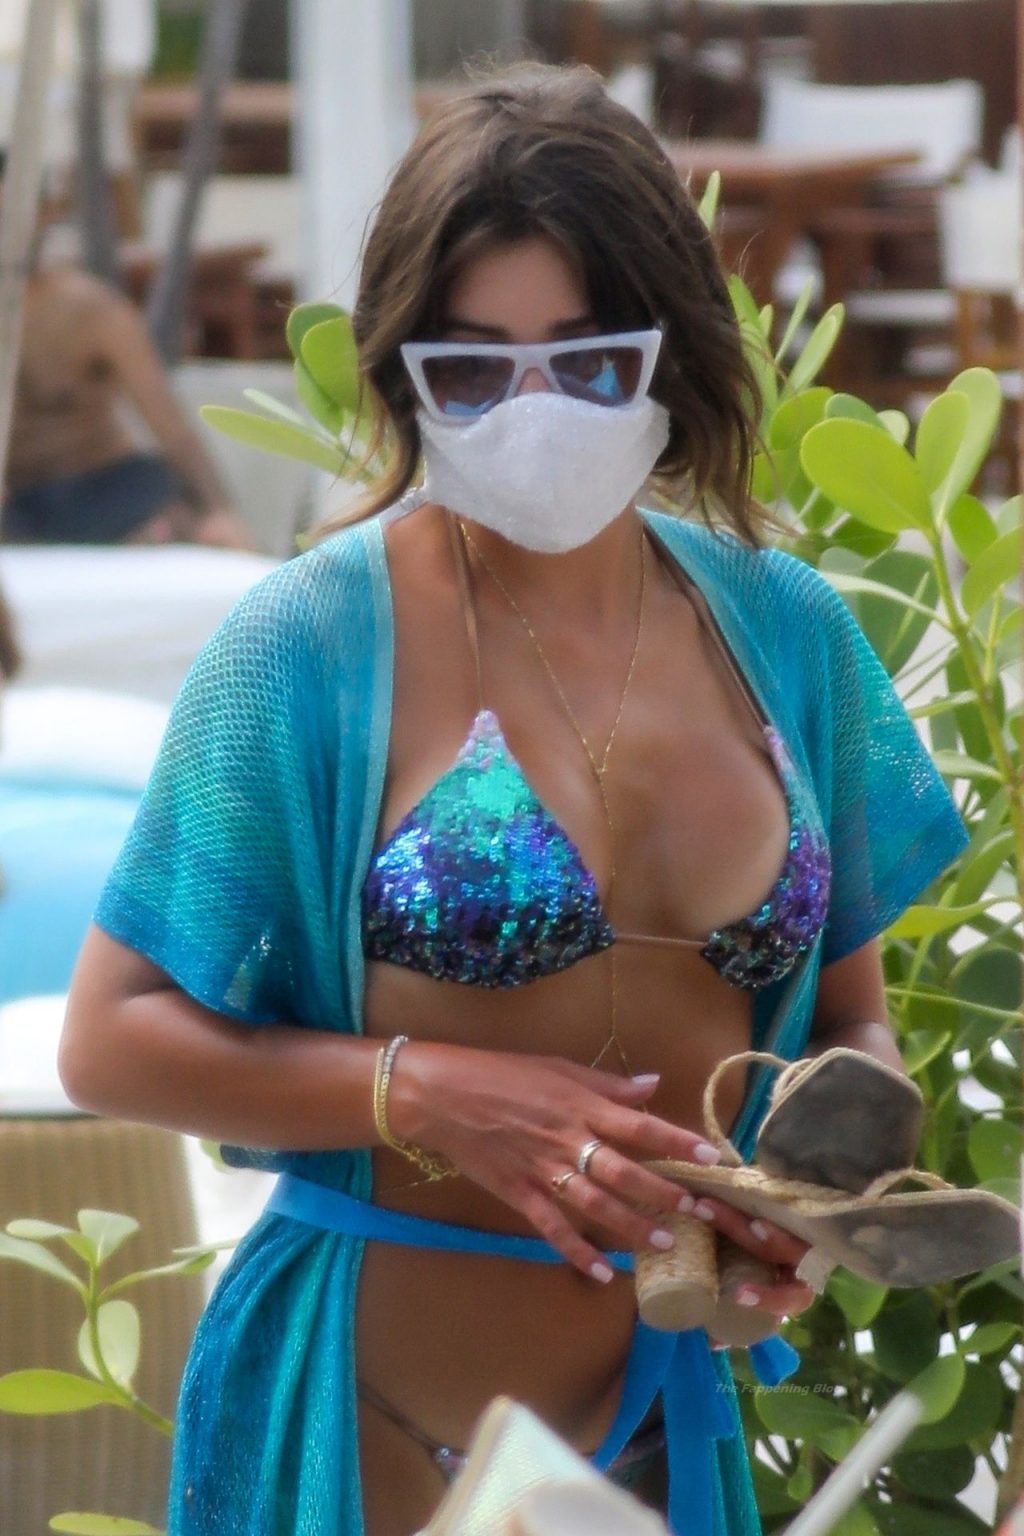 Hannah Ann Sluss Displays Her Sexy Bikini Body in Miami (72 Photos)